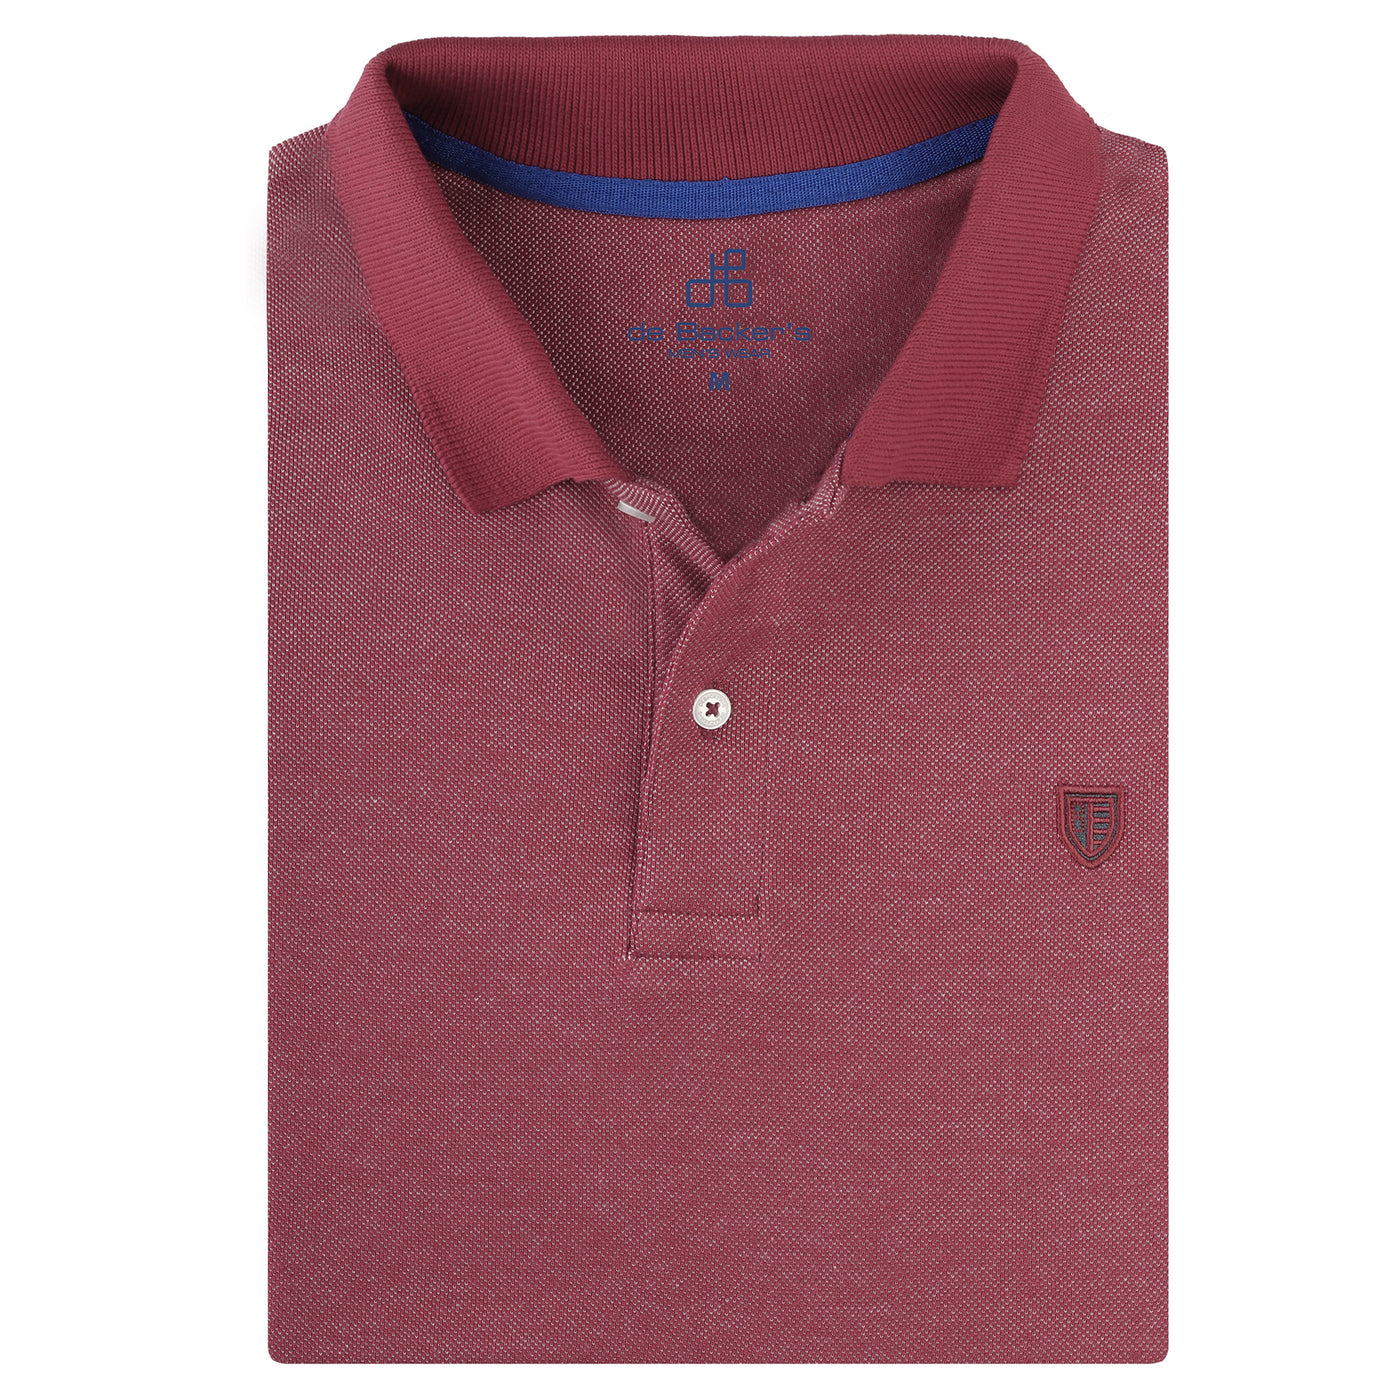 Pique Jacquard Claret Red Cotton Polo